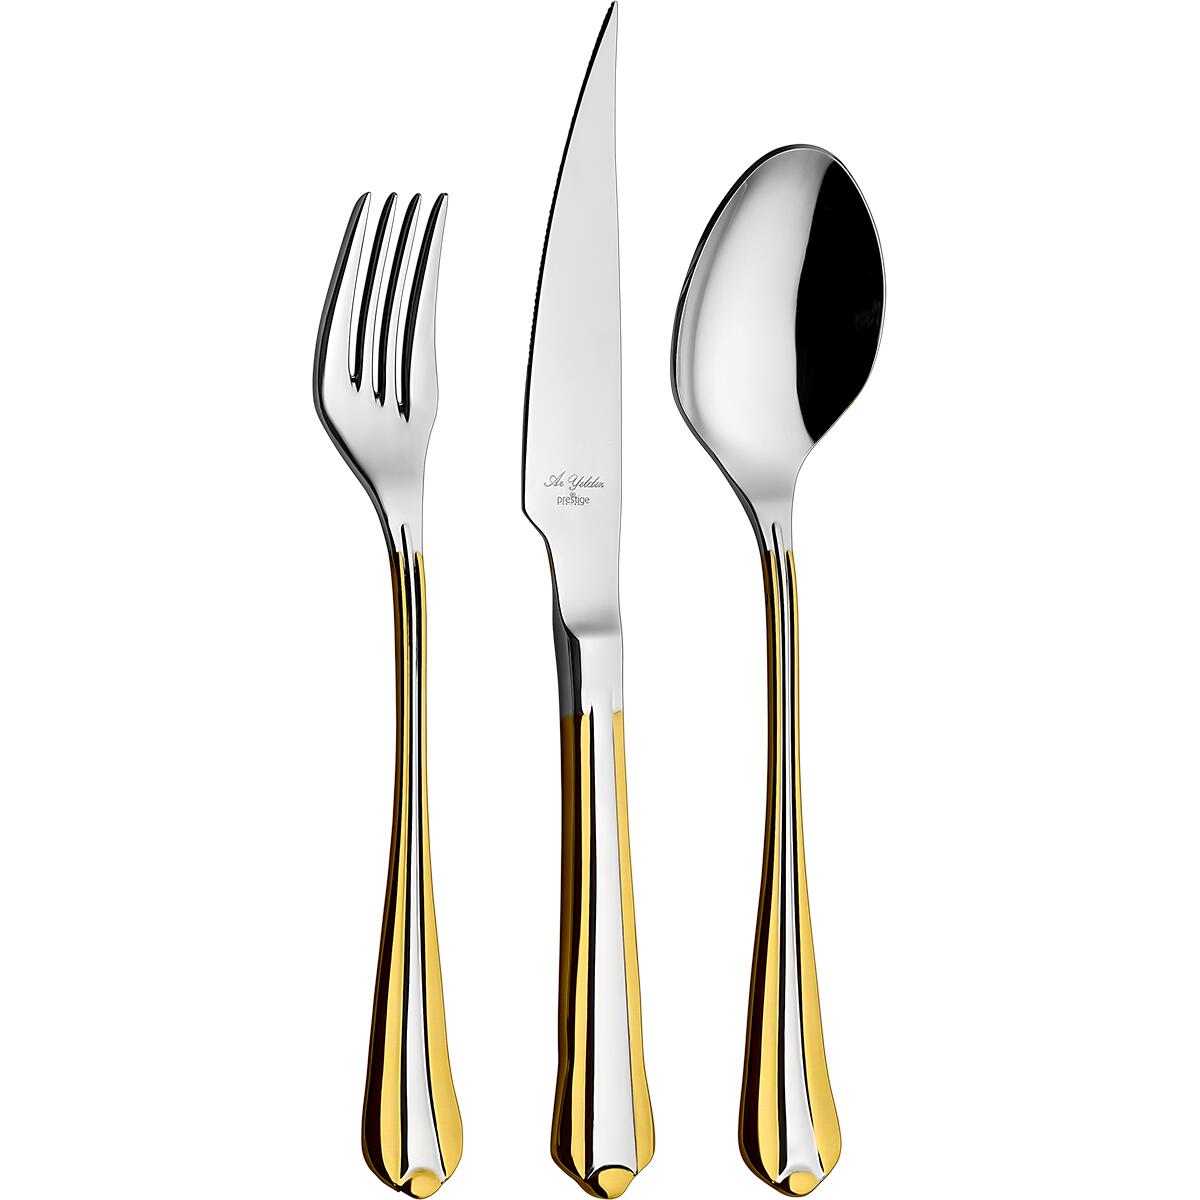 Queen Antique Series Plus Fork Spoon Knife Set 84 piece